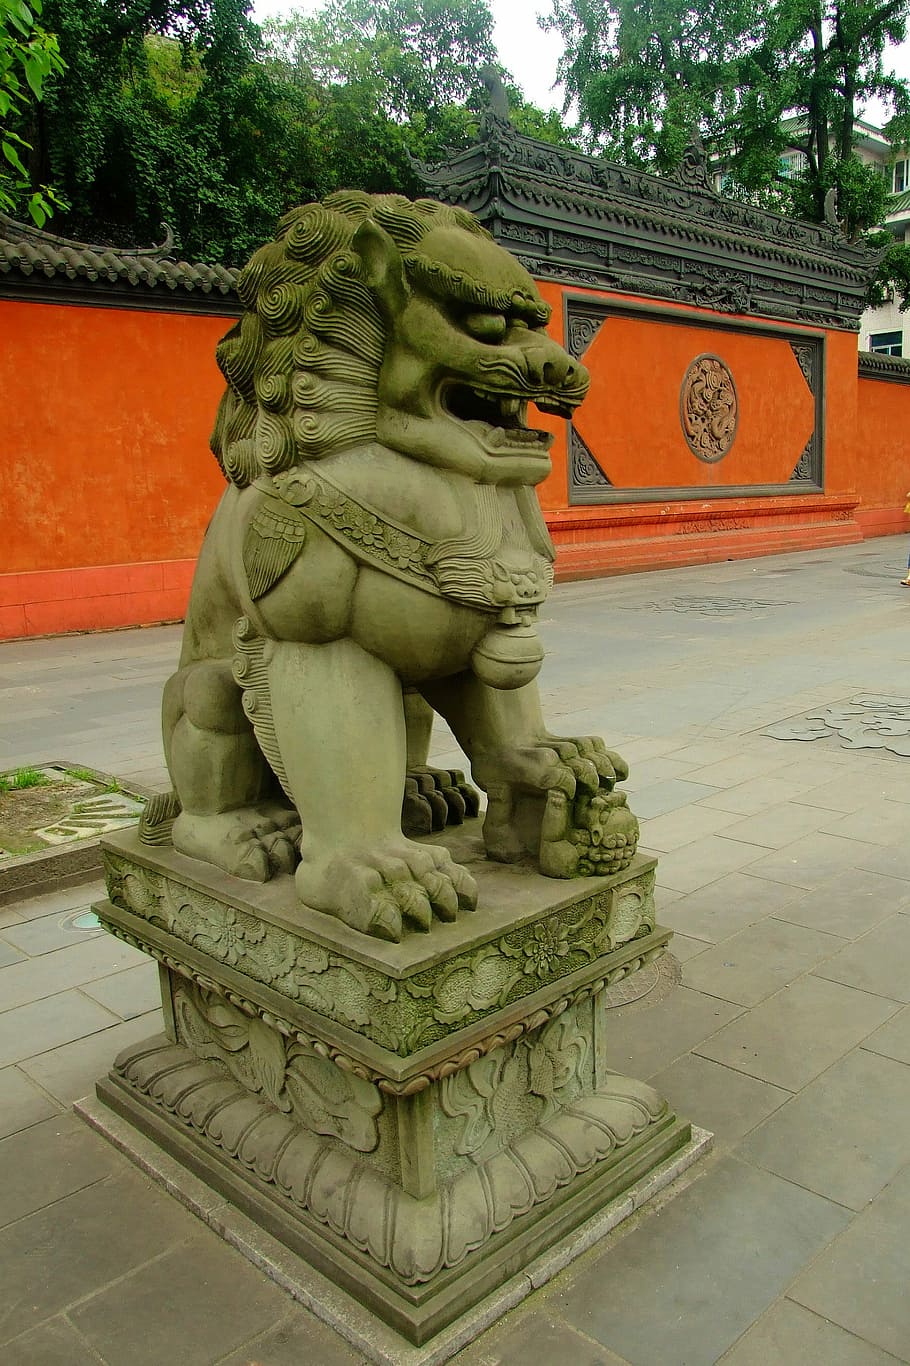 outside, daci temple, Guardian Lions, Daci, Temple, Chengdu, Sichuan, China, photos, public domain